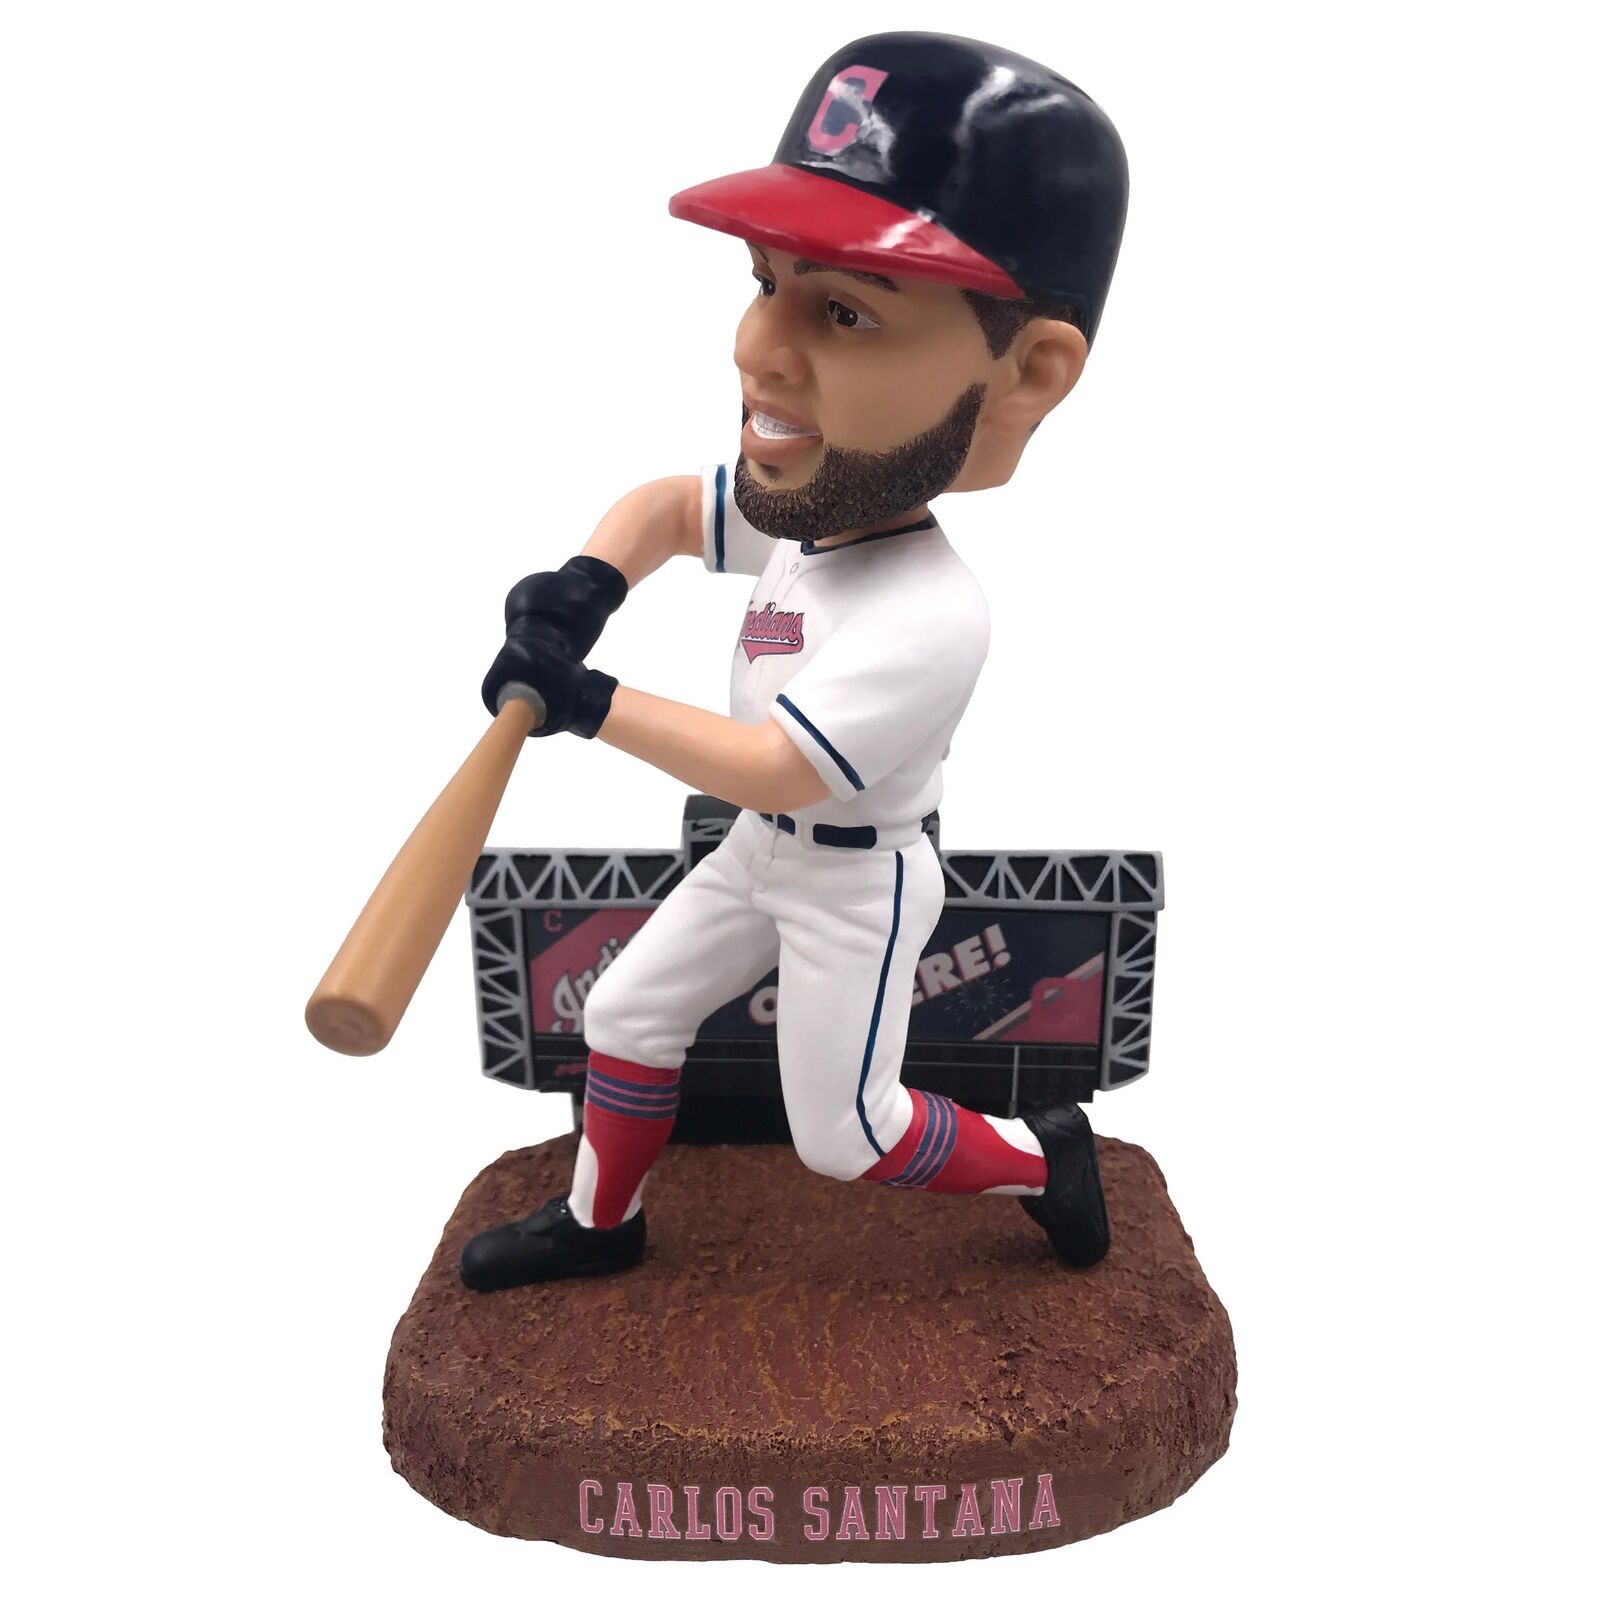 Carlos Santana Cleveland Indians Scoreboard Bobblehead MLB Baseball